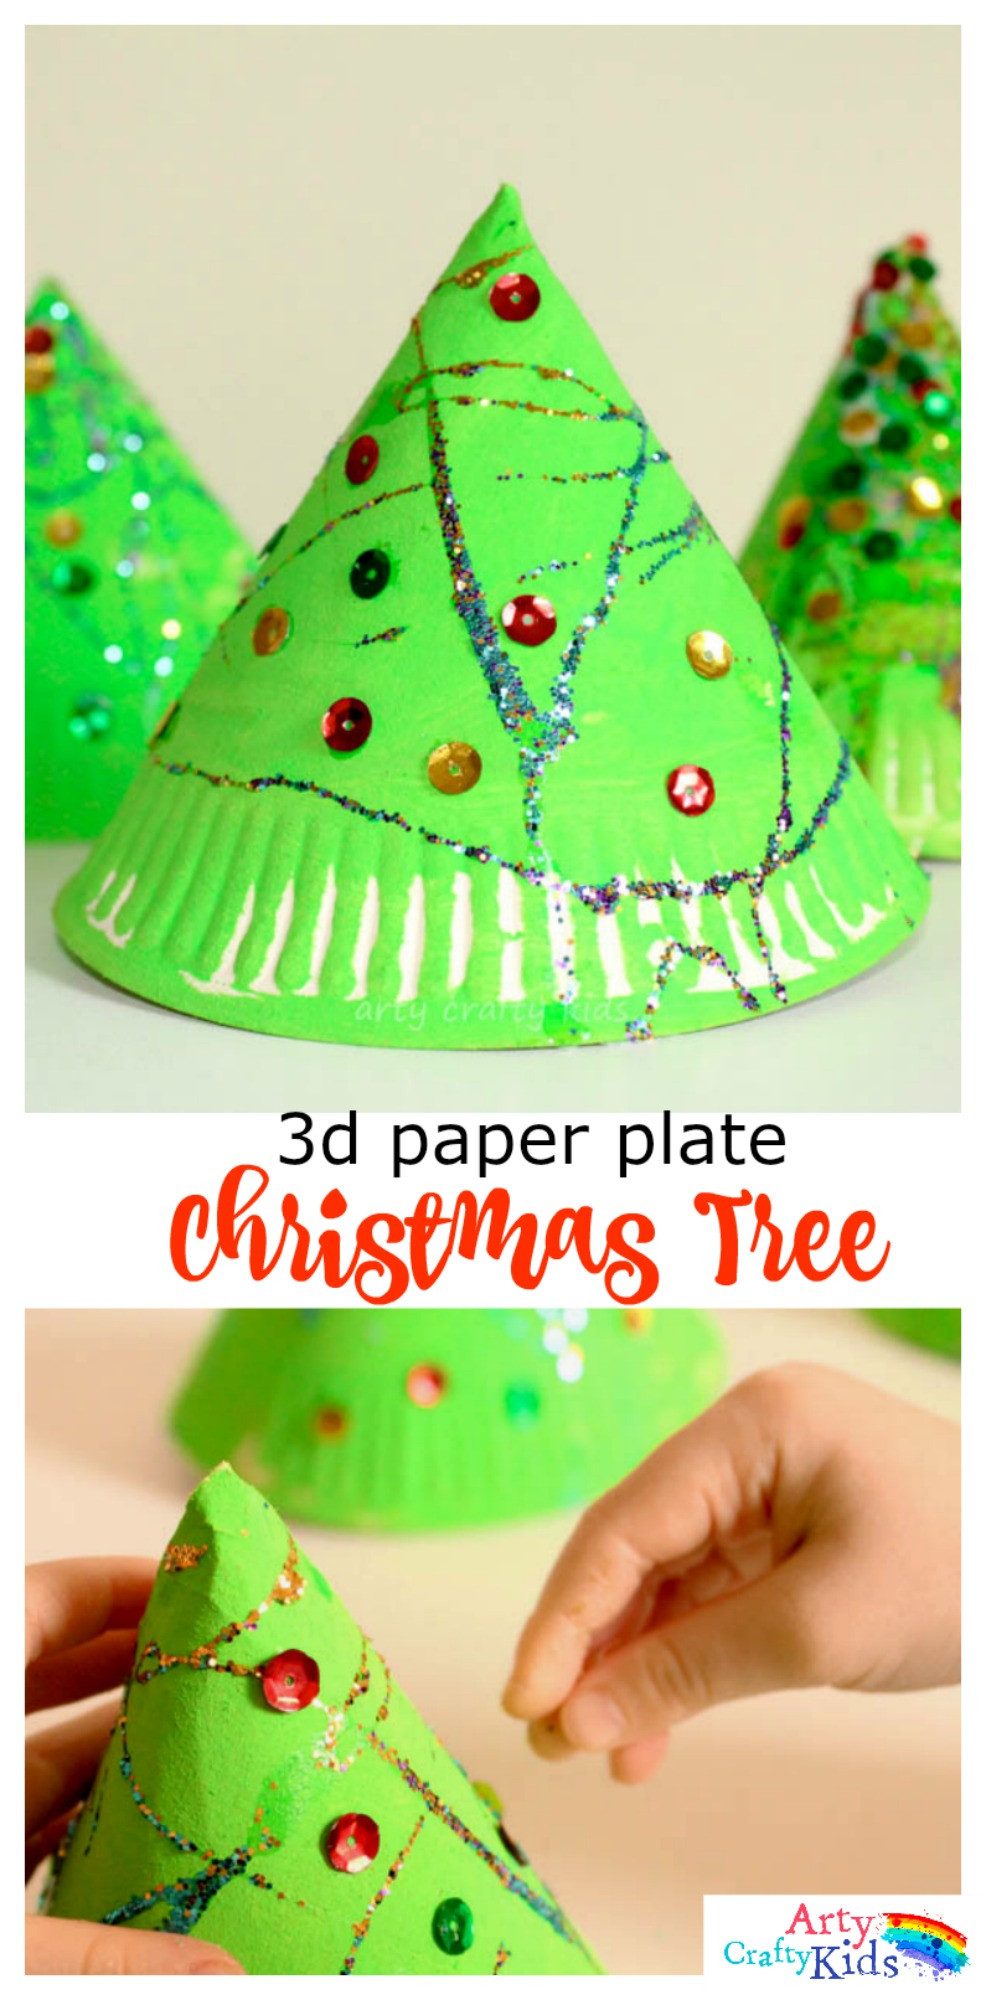 Easy Preschool Crafts
 Super Fun 3d Paper Plate Christmas Tree Craft